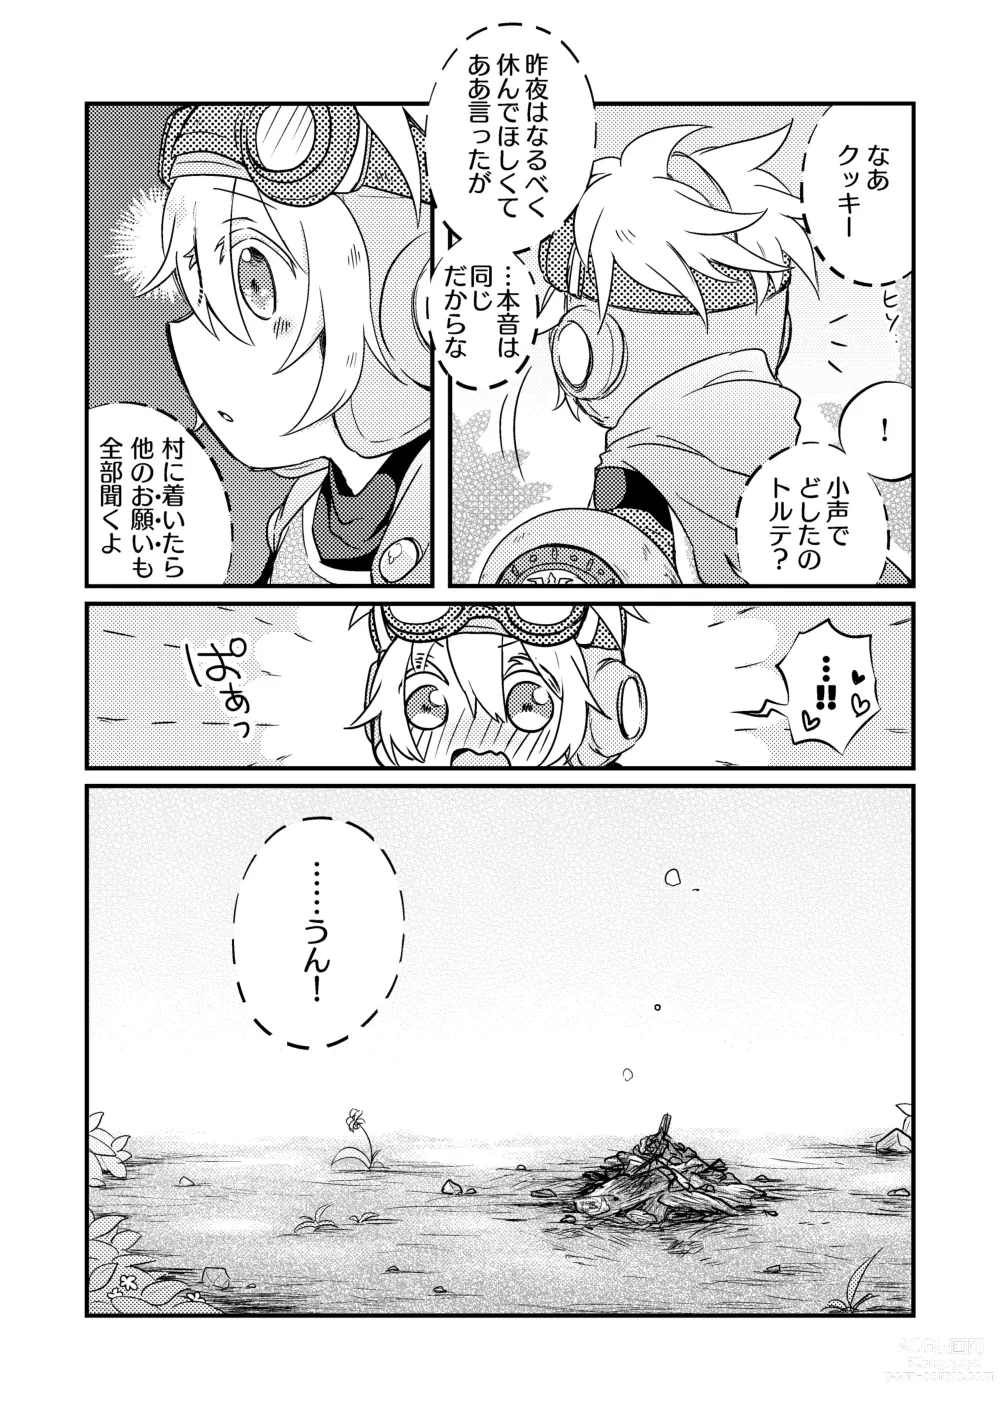 Page 27 of doujinshi Enka